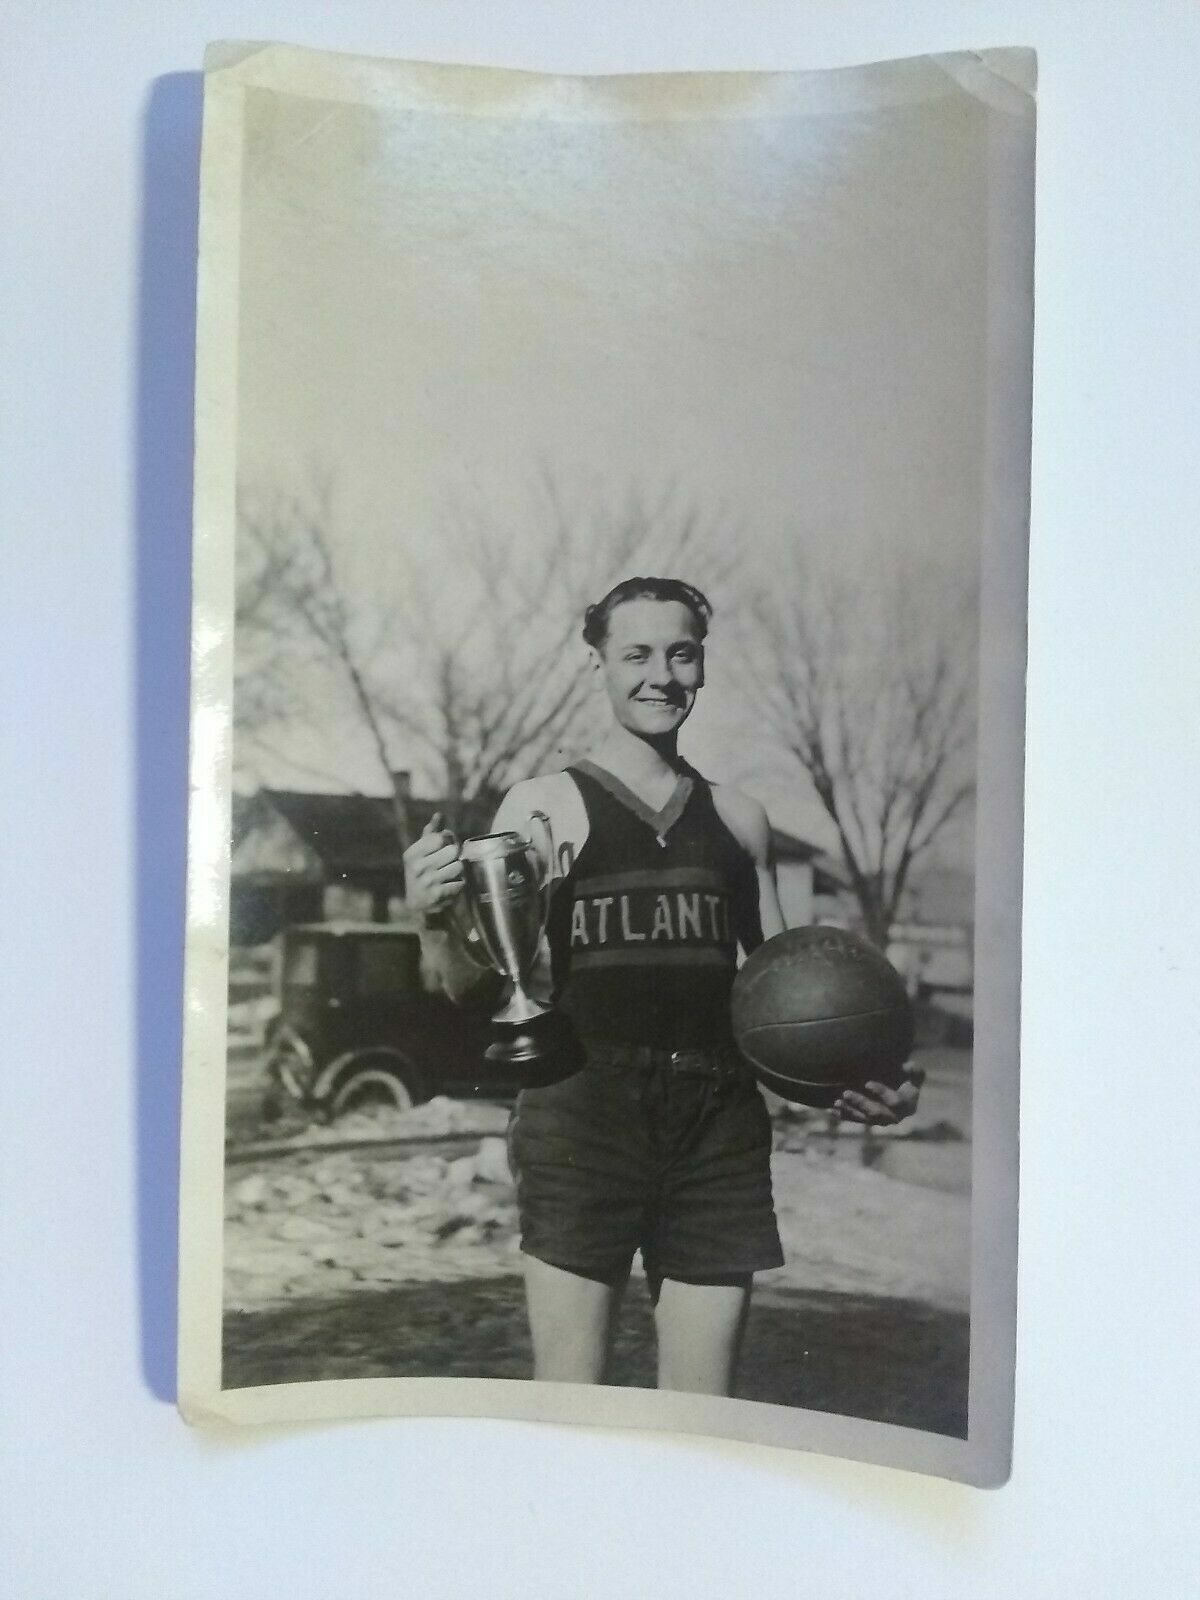 Vintage c. 1920's Basketball Photo Player Holding Trophy Wearing Atlanta Uniform